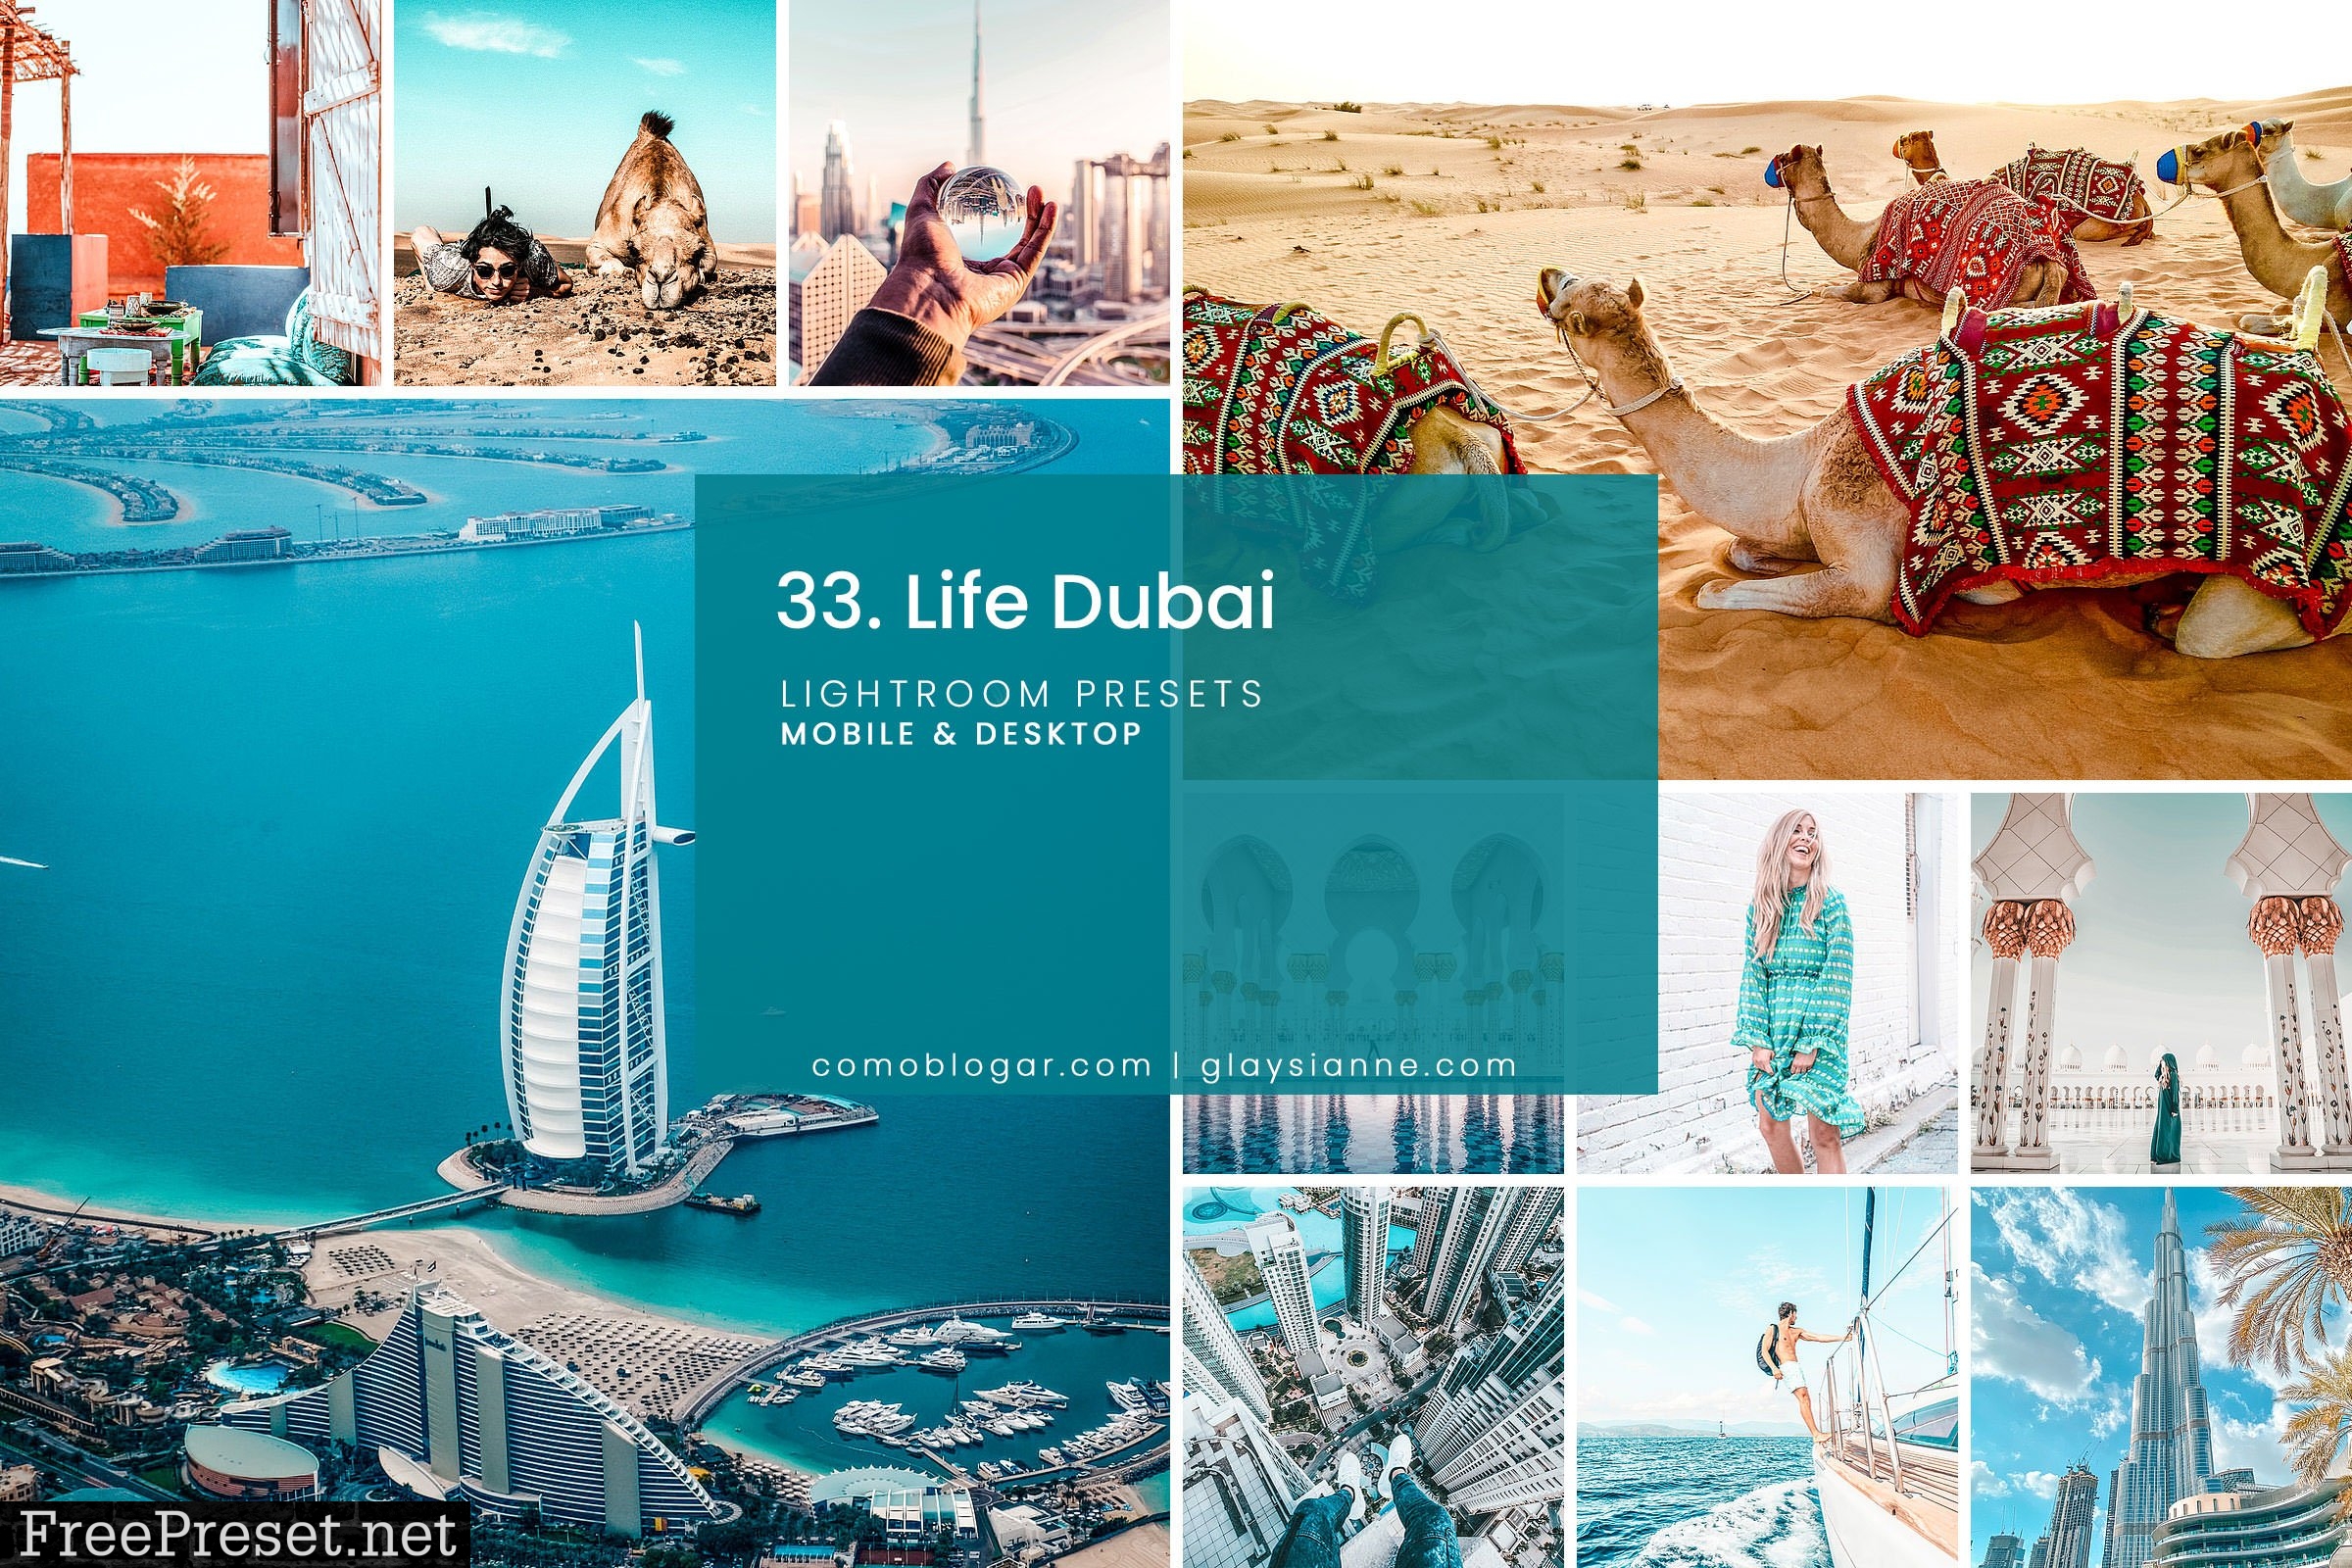 33. Life Dubai